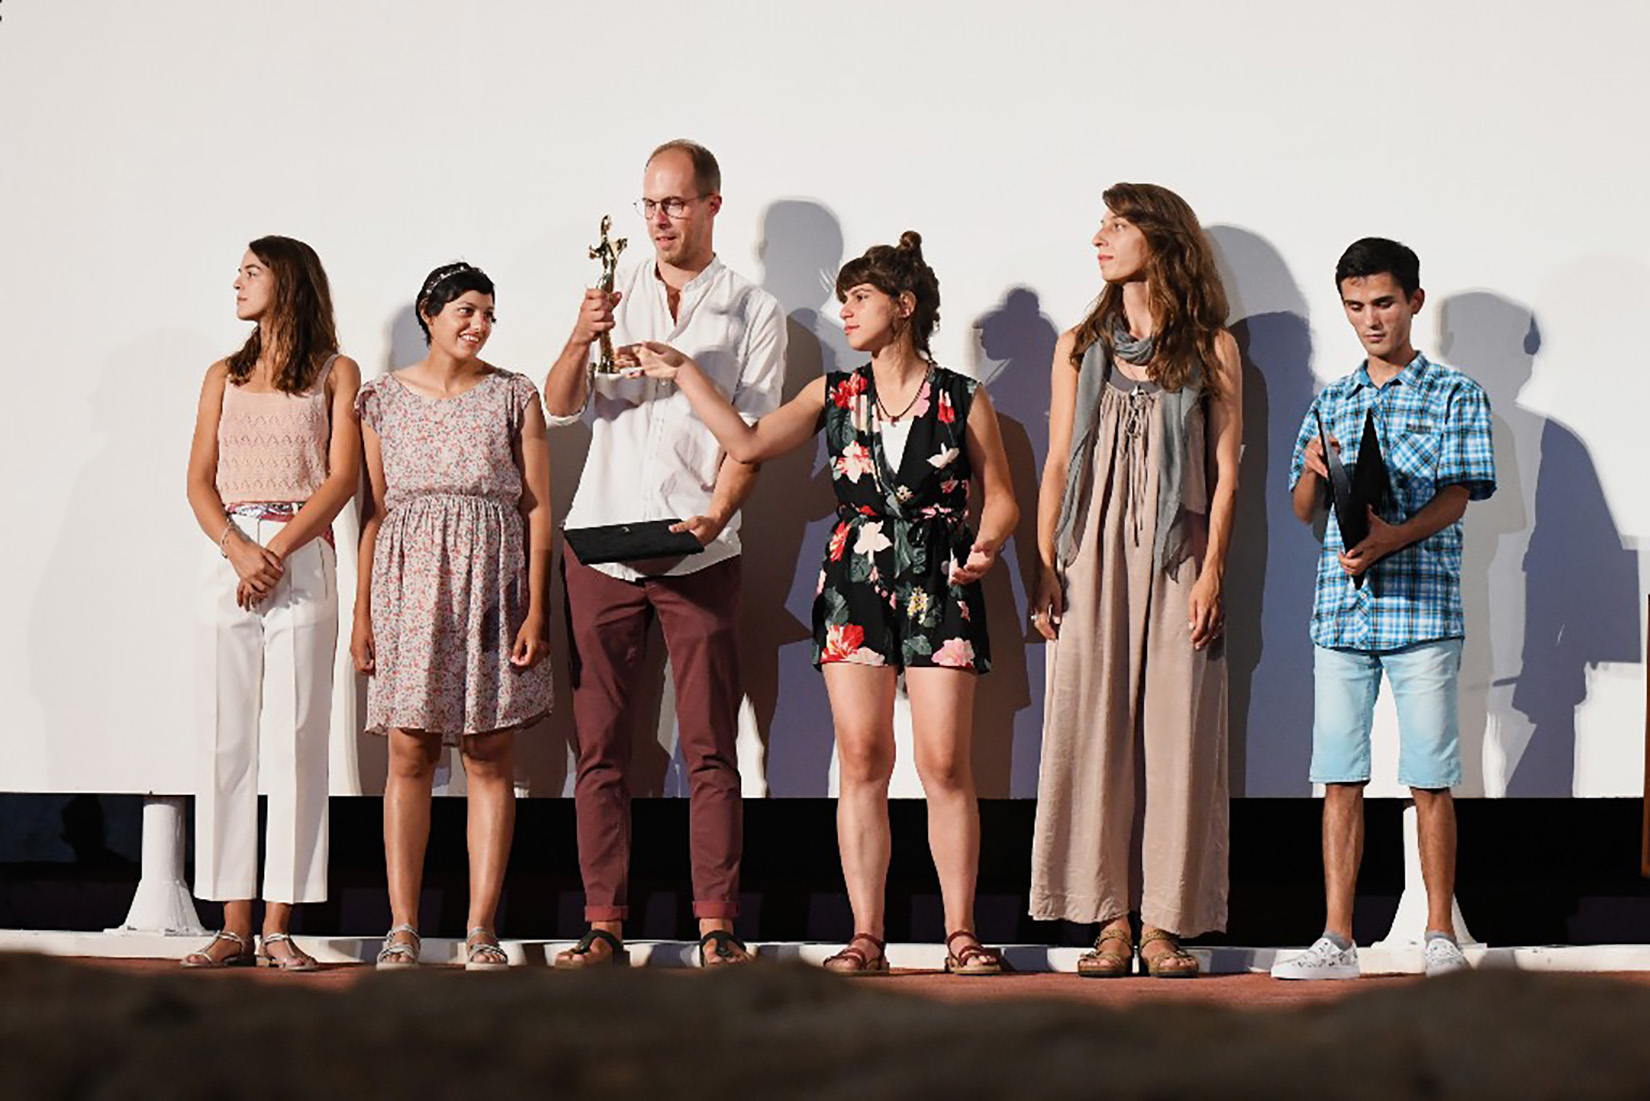 Filmski festival Herceg Novi - Montenegro film festival, Suton djir i film